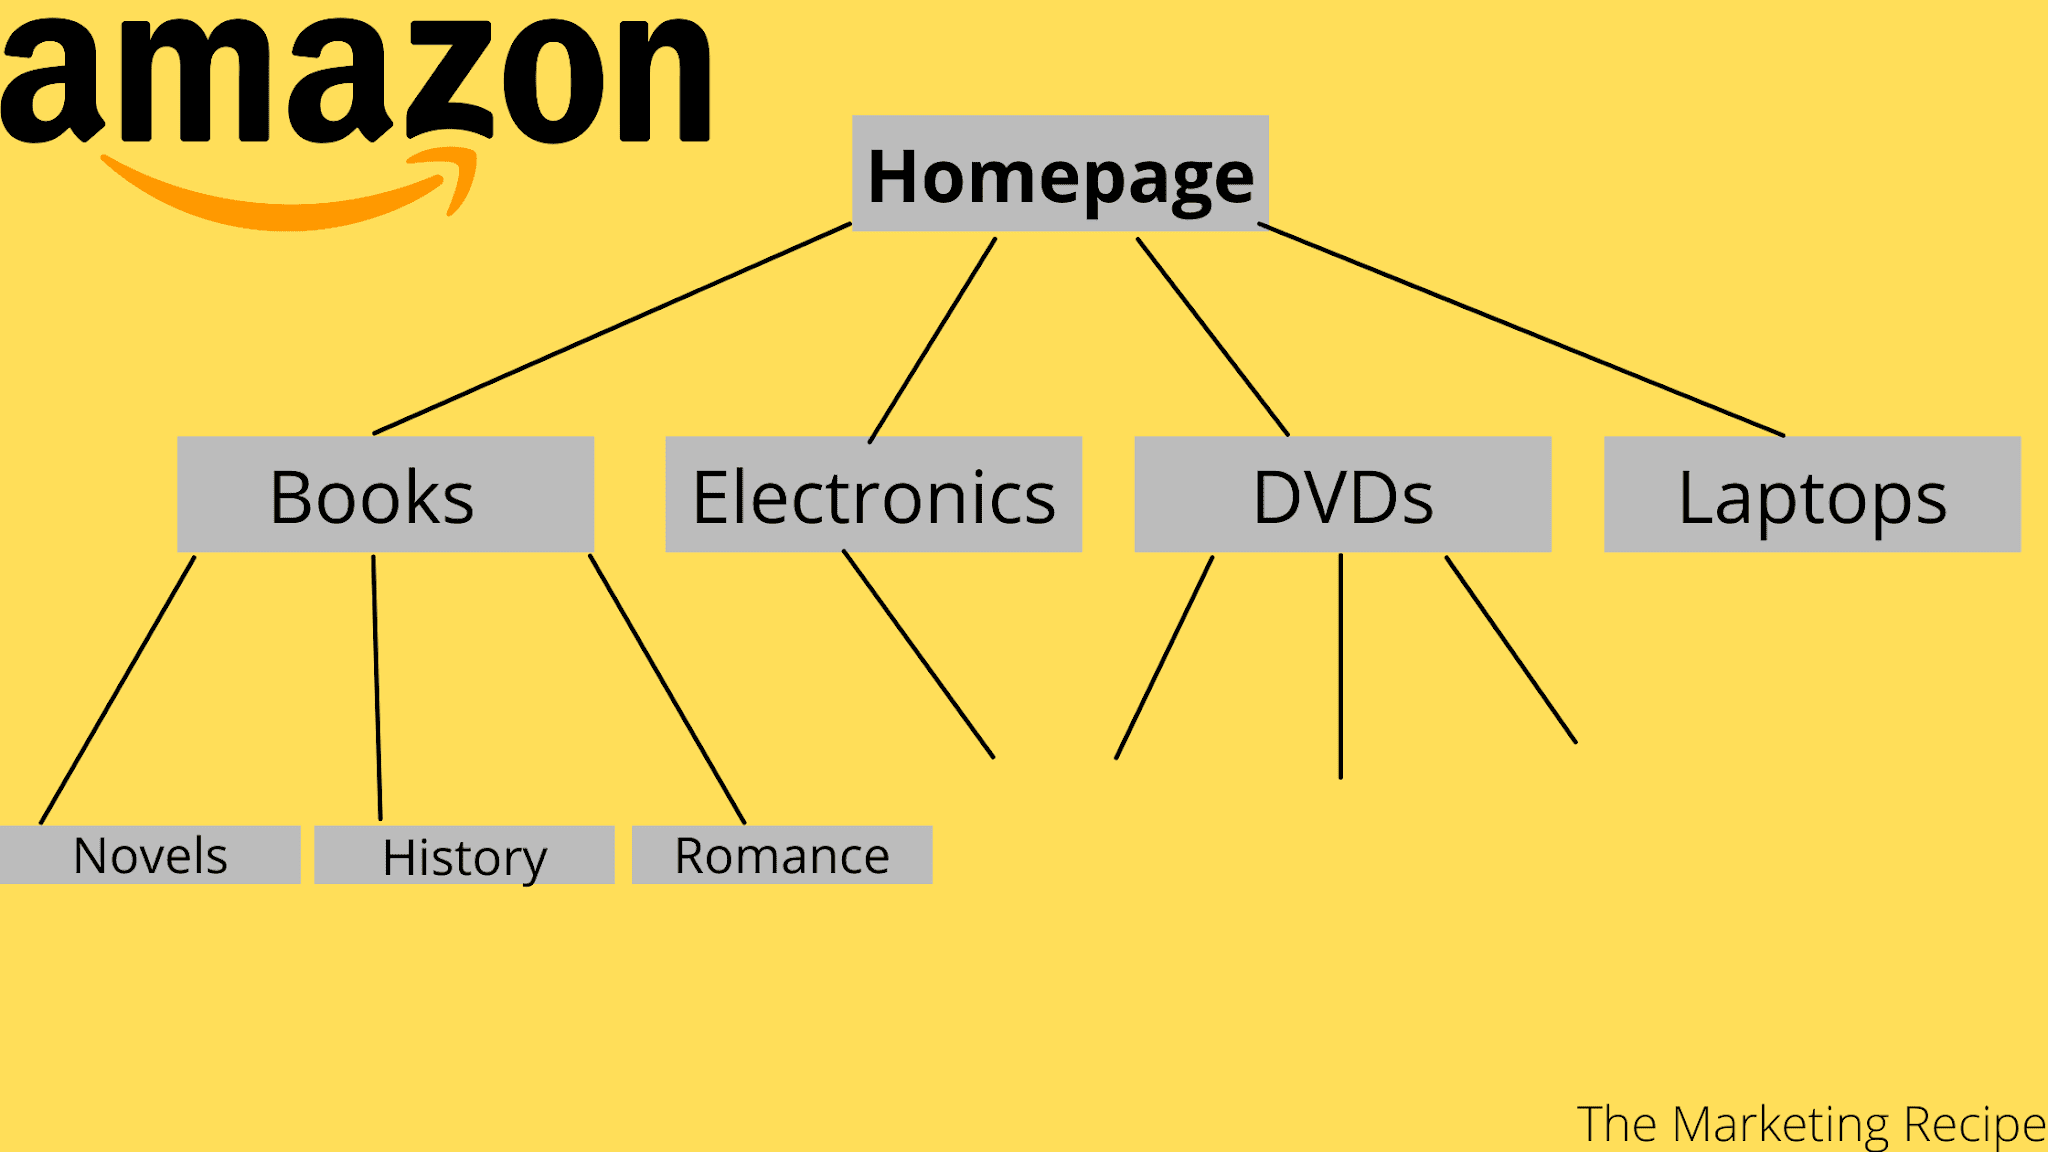 Amazon's website structure